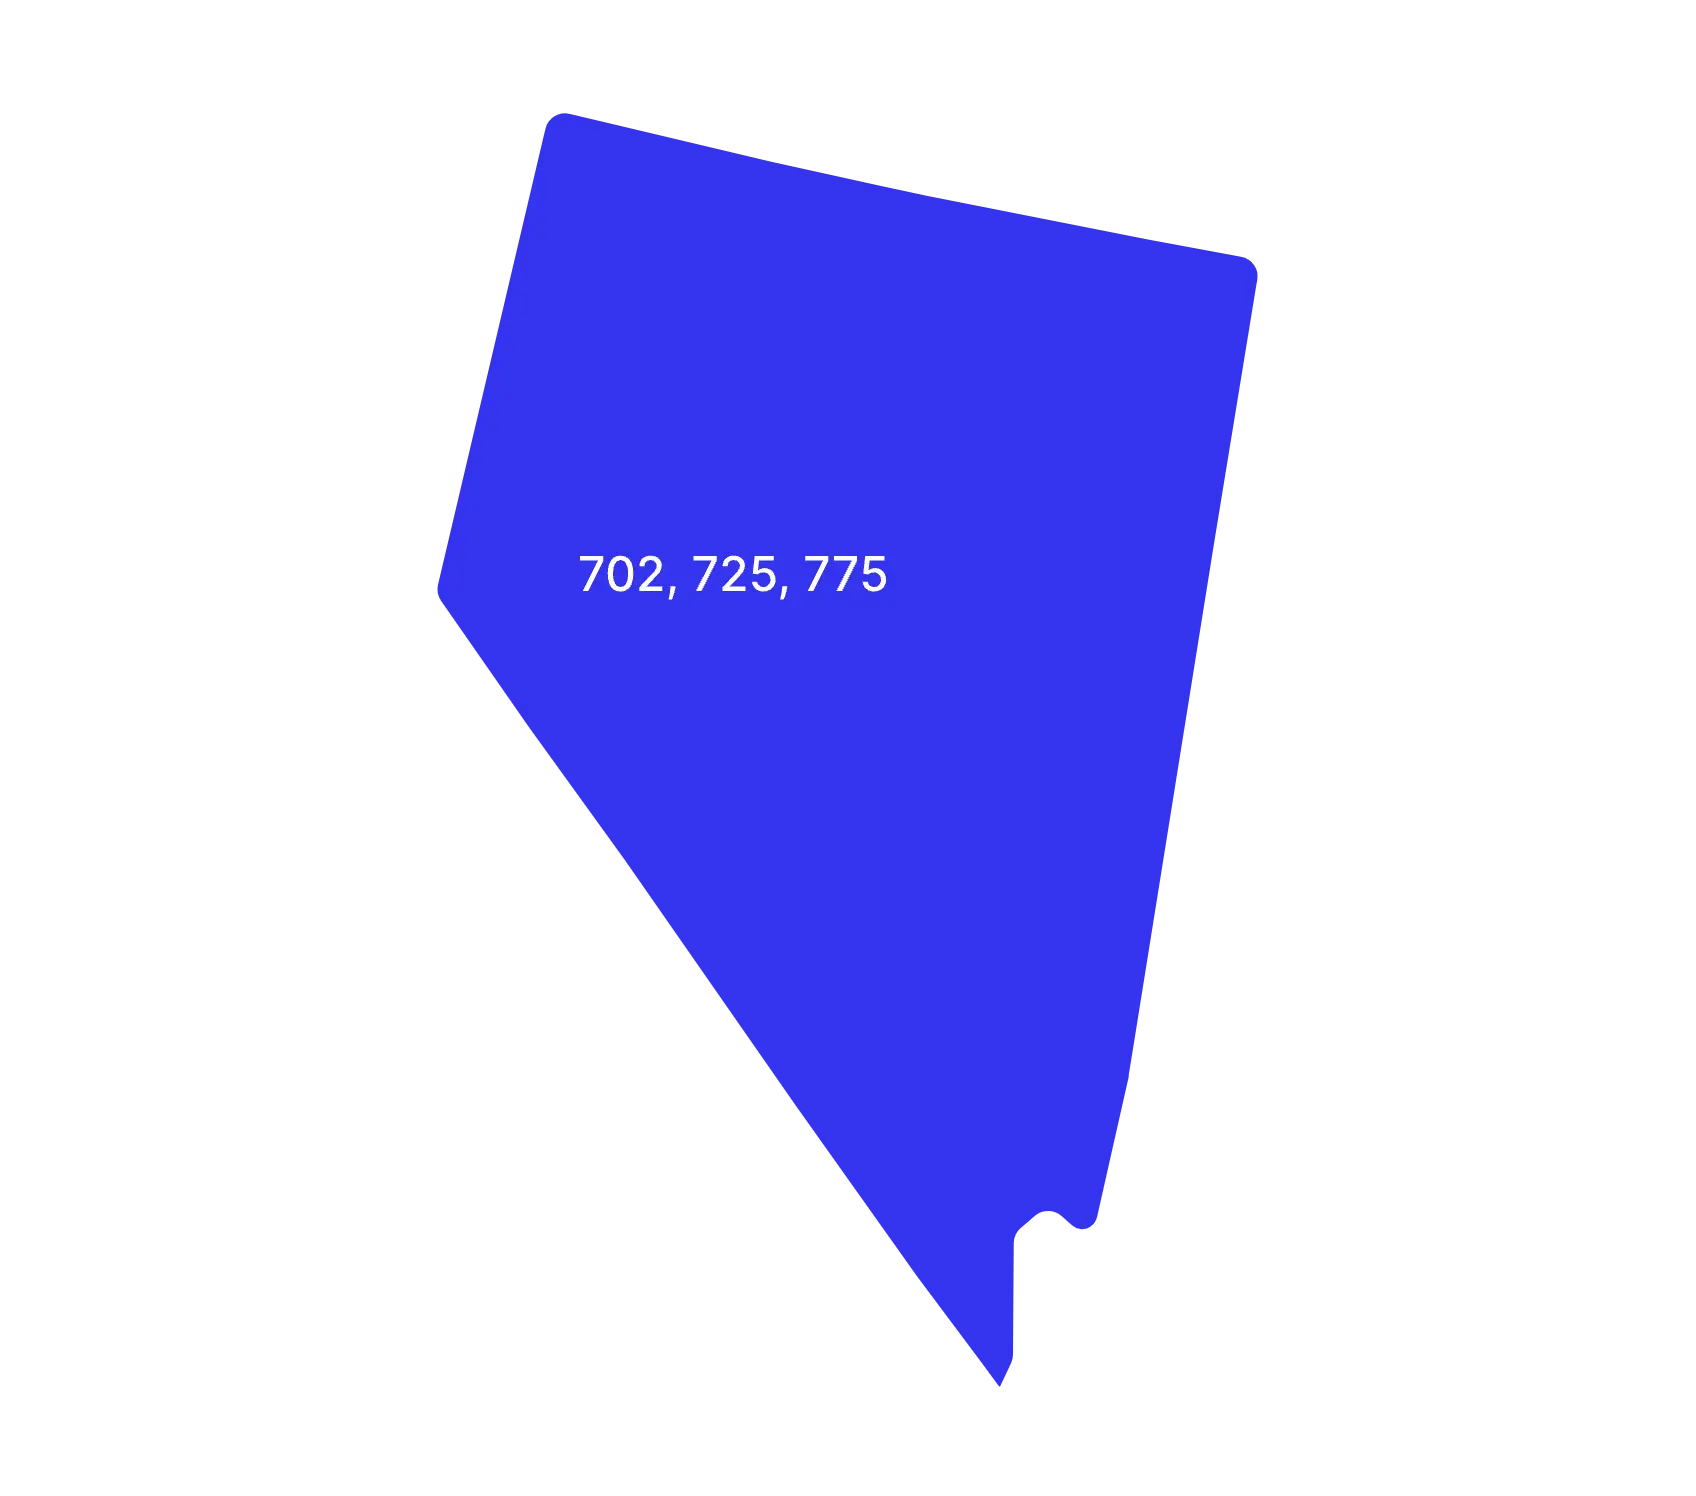 Nevada phone numbers